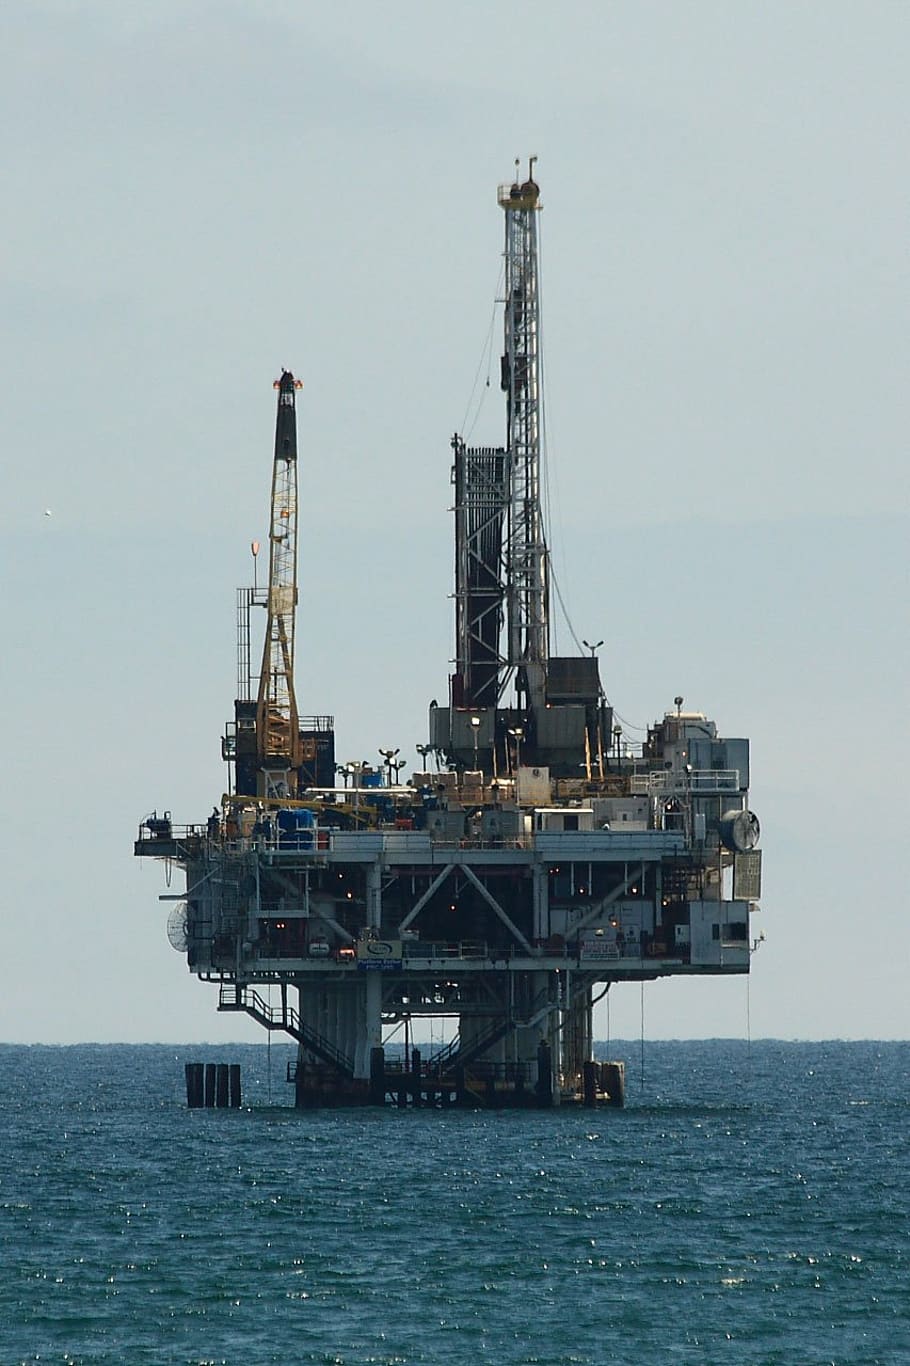 oil, drilling, offshore, platform, industry, energy, industrial, petrochemical, petroleum, fuel